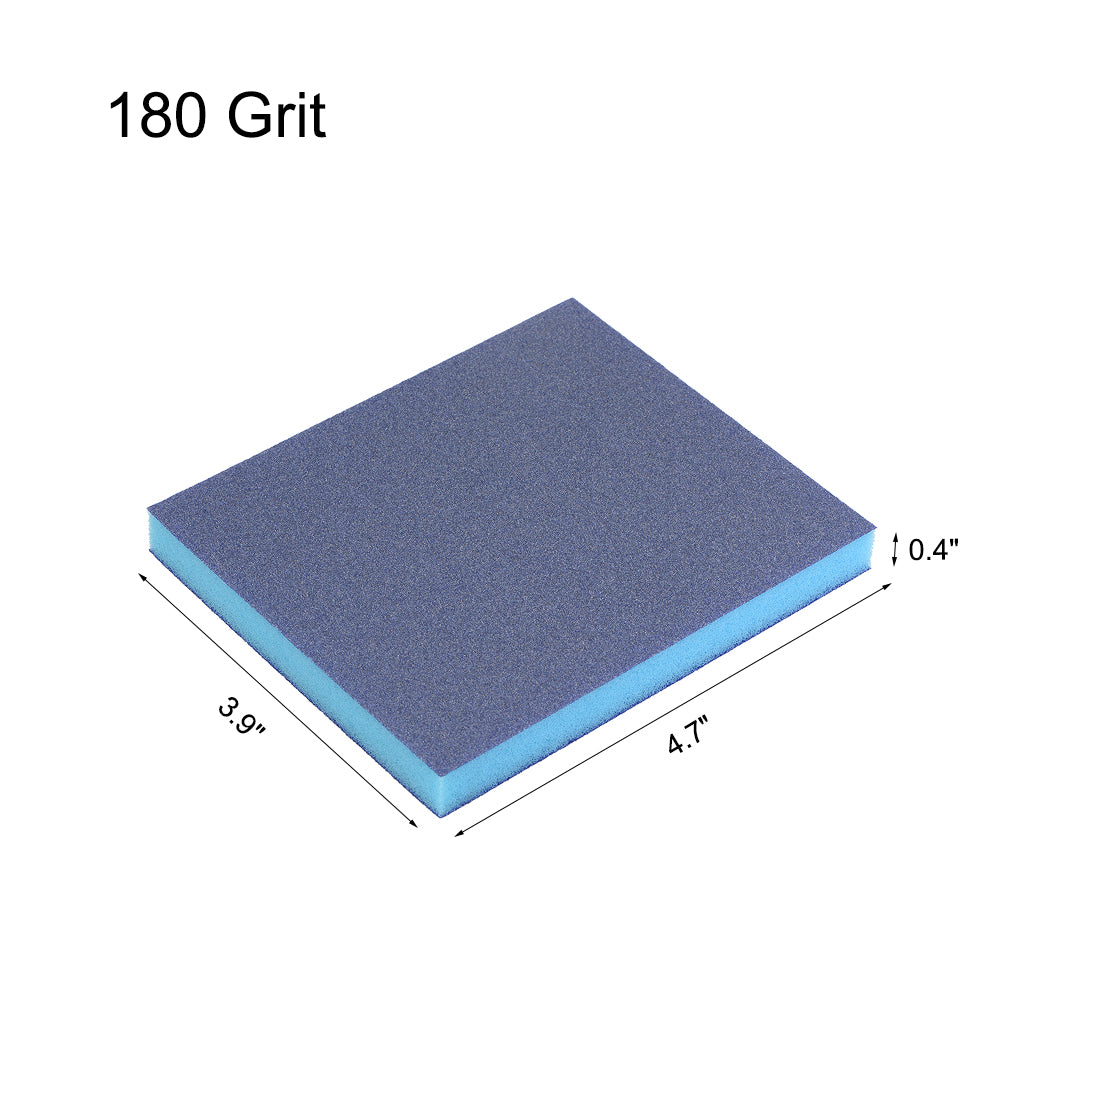 uxcell Uxcell Sanding Sponge 180 Grit Sanding Block Pad 4.7inch x 3.9inch x 0.4inch Blue 6pcs